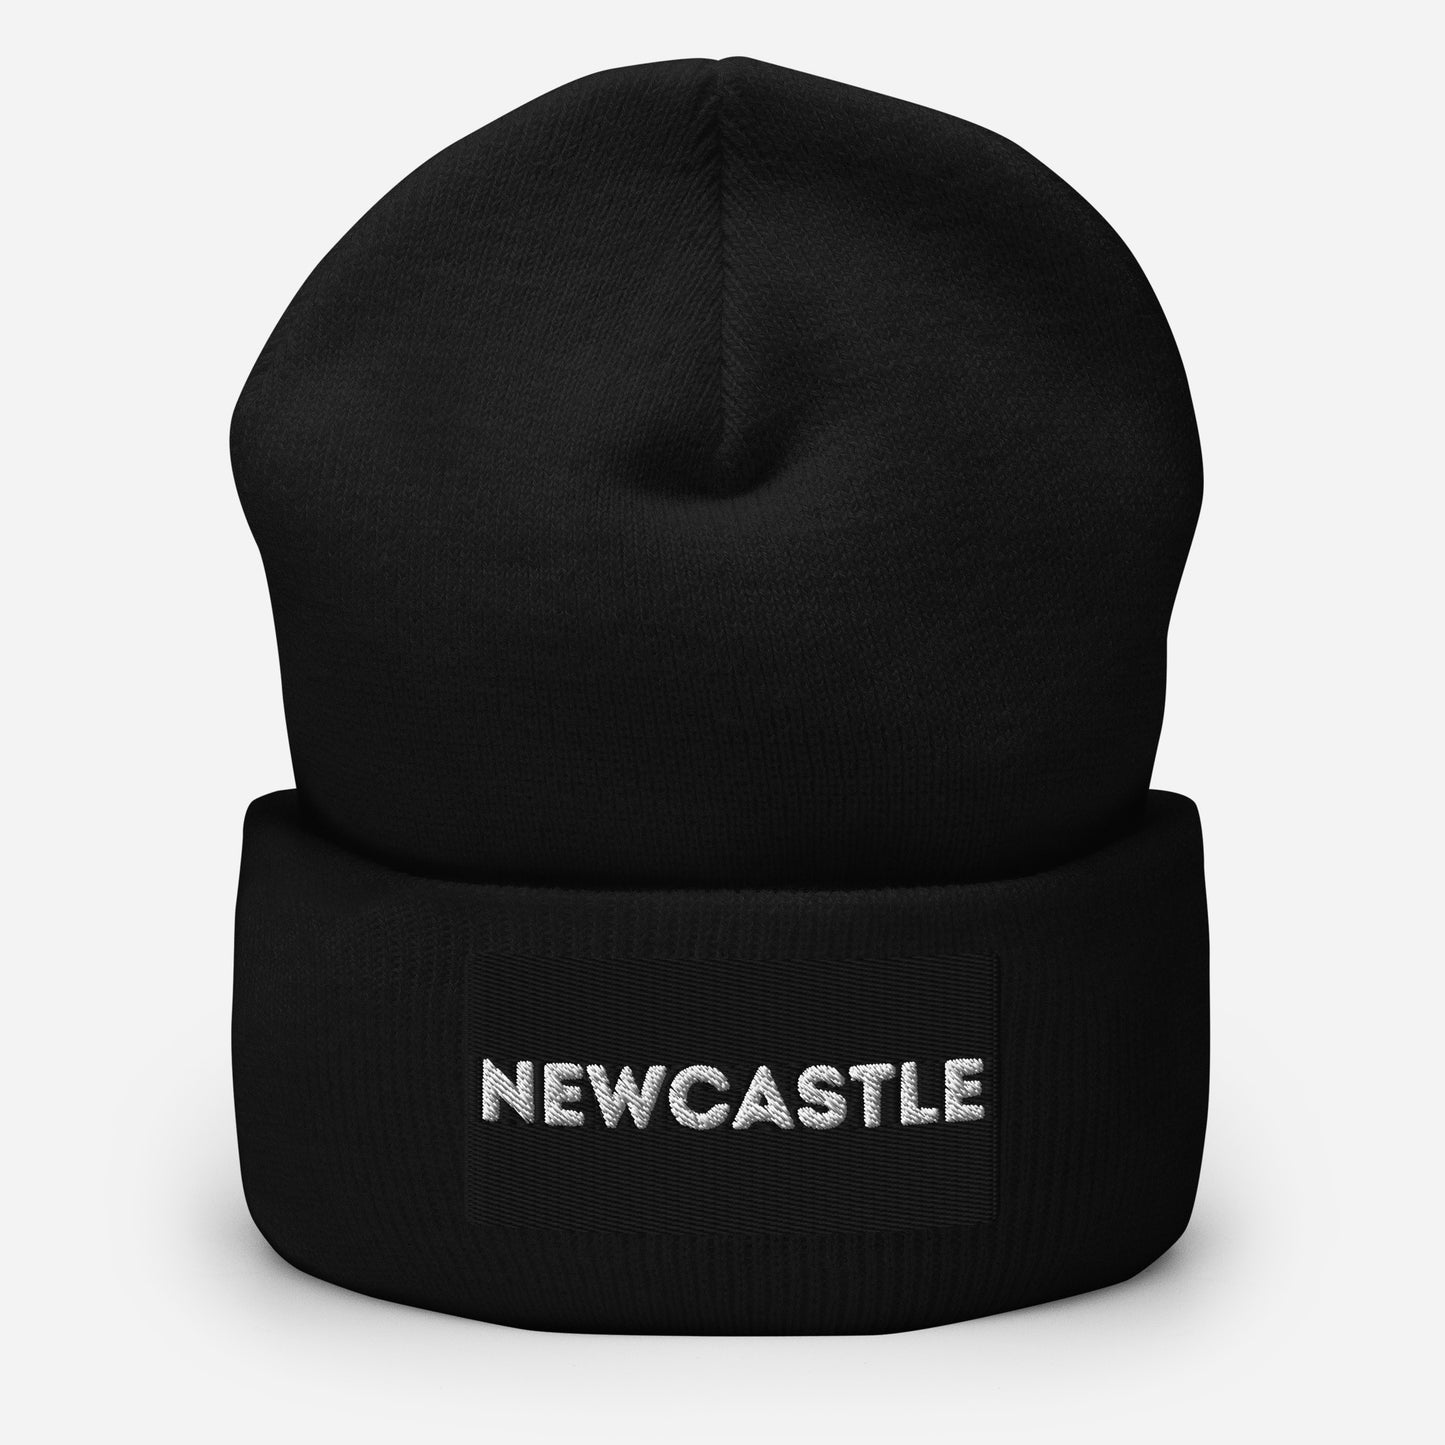 Newcastle Cuffed Beanie Hat